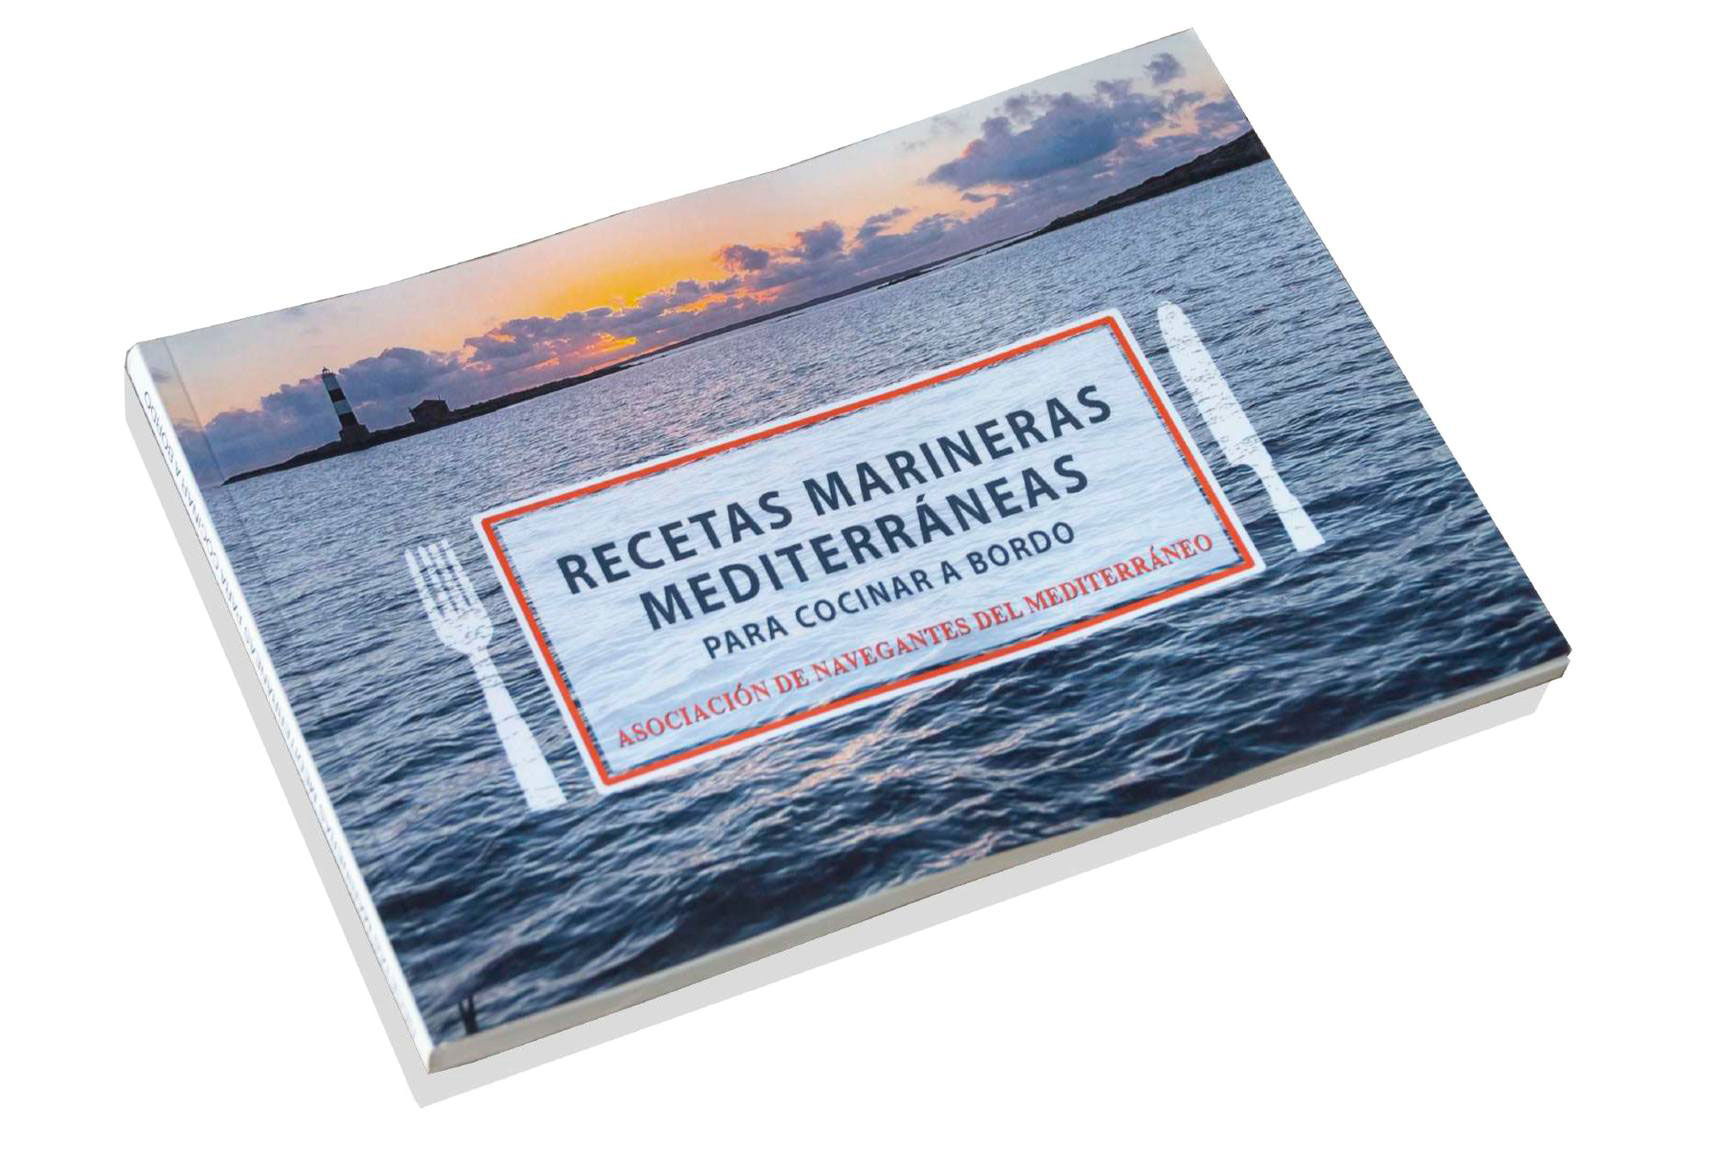 adn mediterráneo, asociación de navegantes del mediterráneo, libro, recetas marineras mediterráneas,